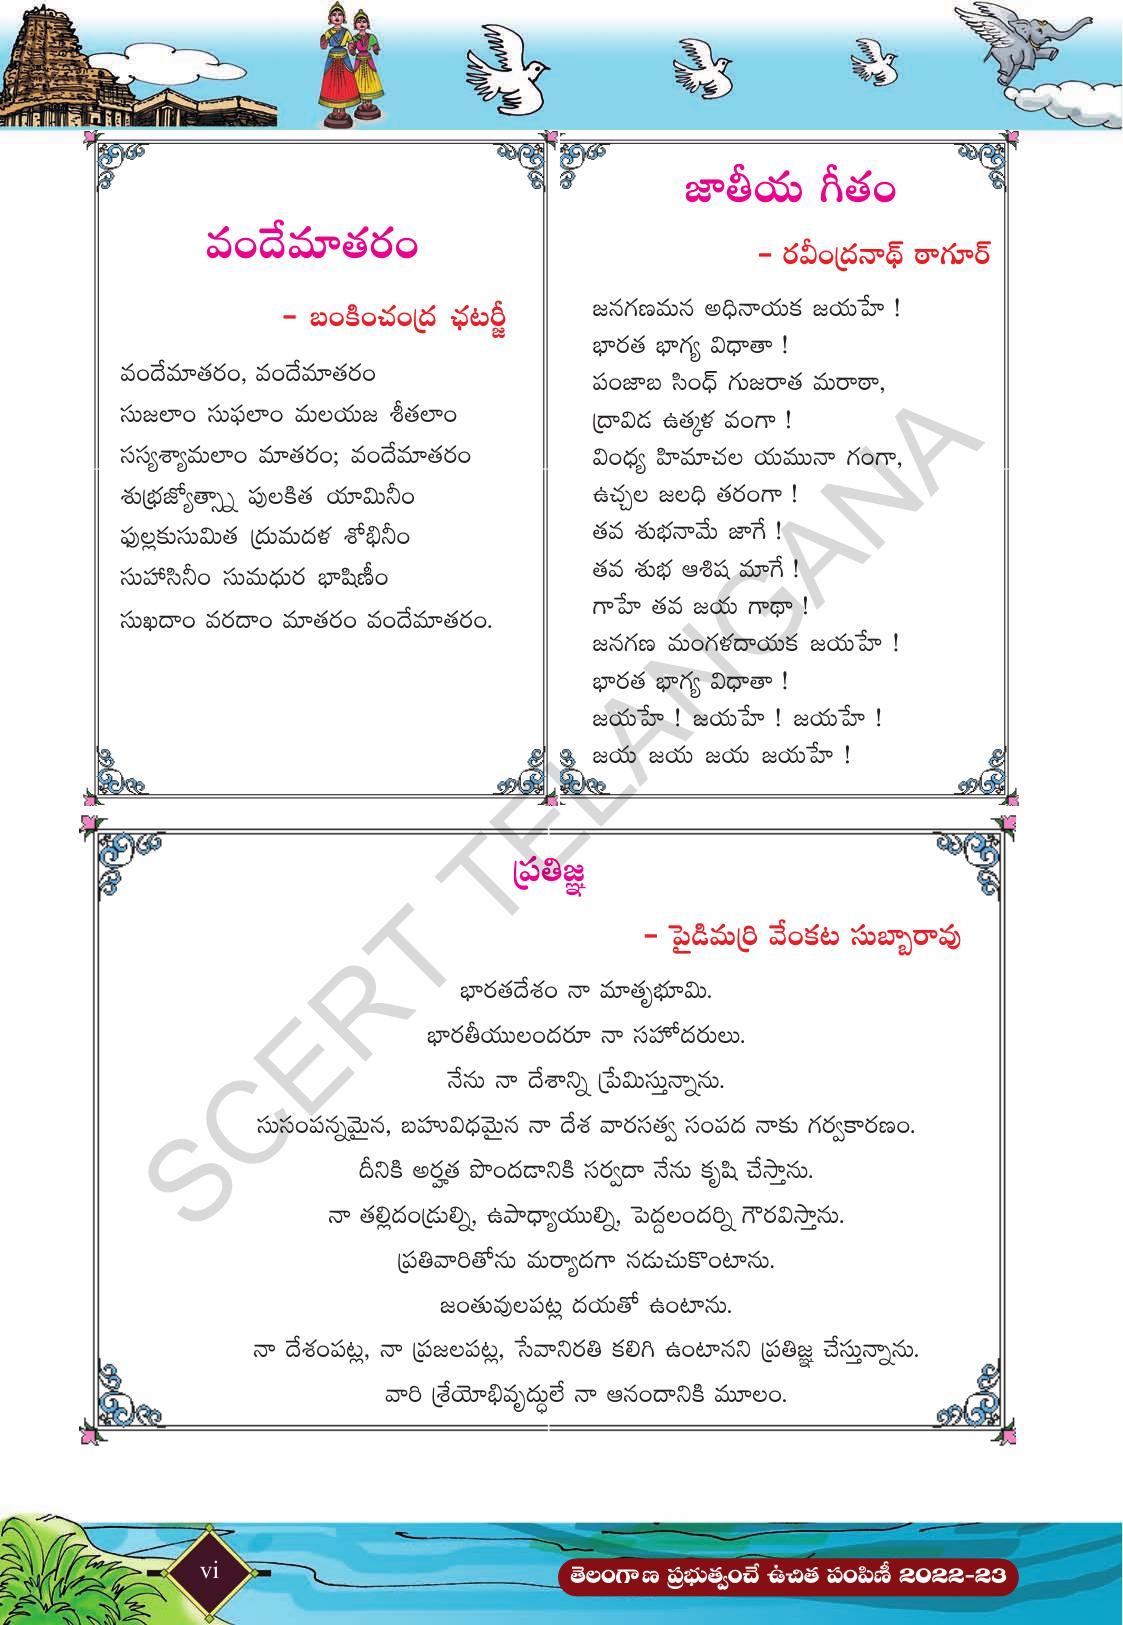 TS SCERT Class 5 Second Language (Telugu Medium) Text Book - Page 8